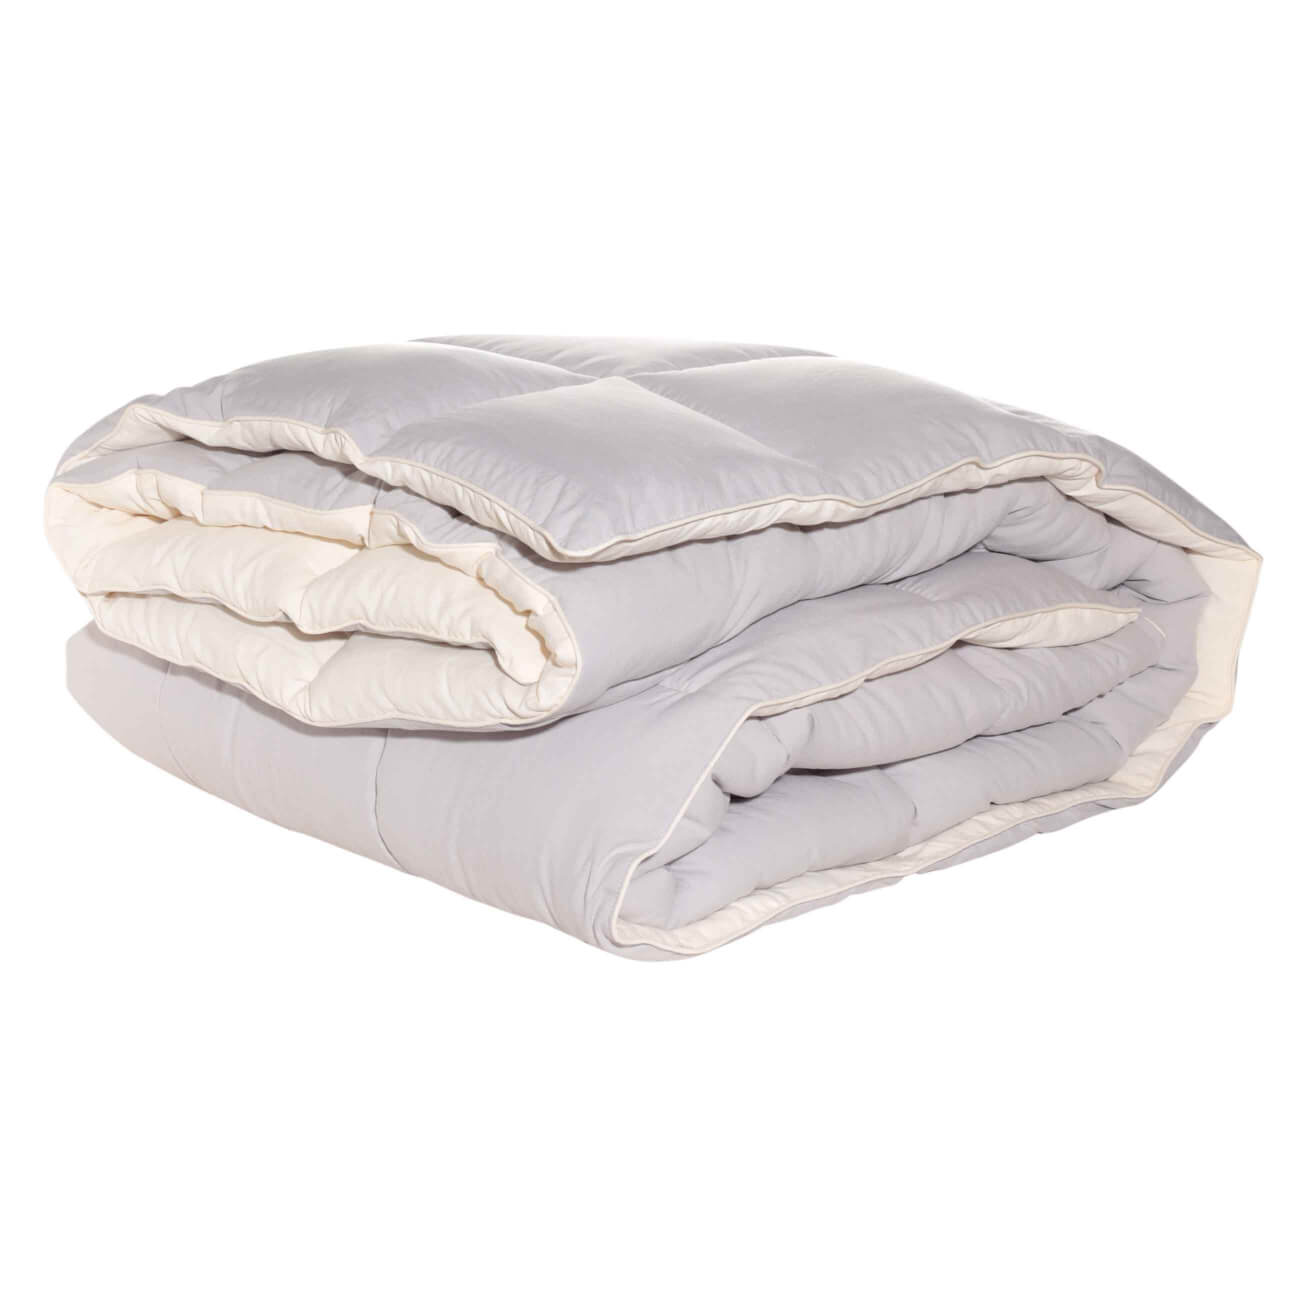 Одеяло, 200х220 см, микрофибра/холлофайбер, бежевое/молочное, Hollow fiber